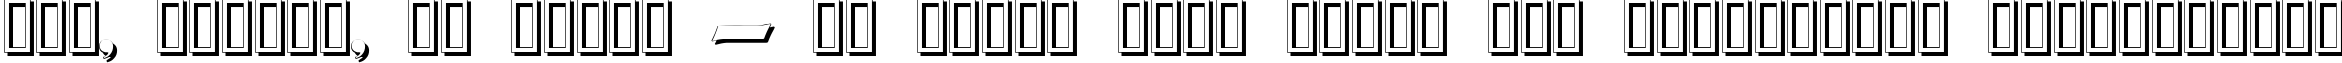 Пример написания шрифтом Domino Shadow текста на украинском